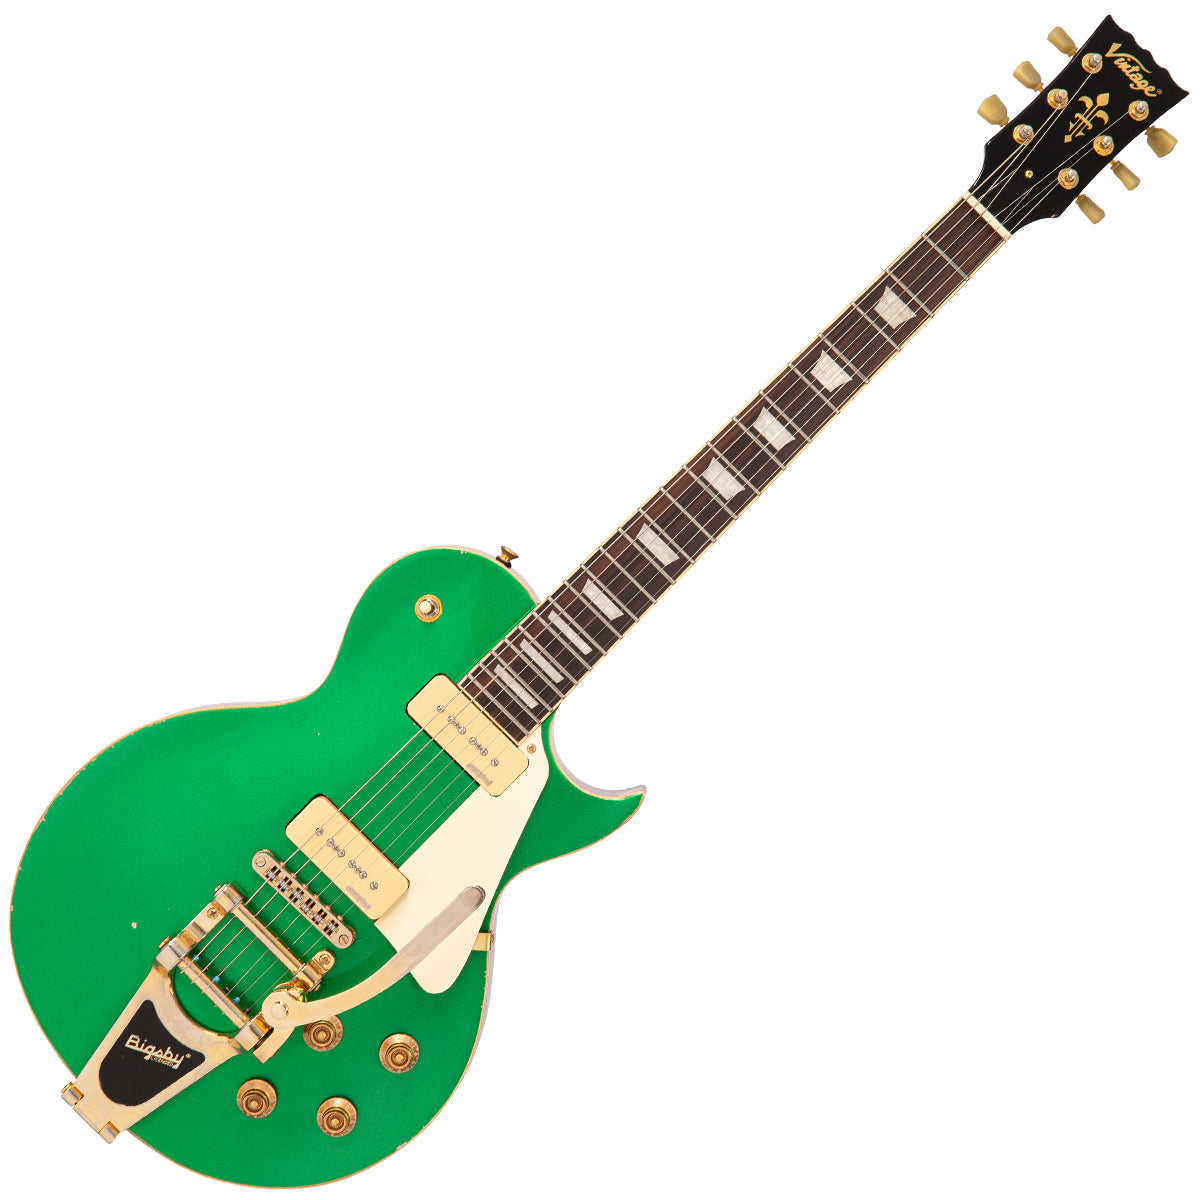 SOLD - Vintage V100 ProShop Custom ~ Emerald Green with Bigsby, Electric Guitars for sale at Richards Guitars.